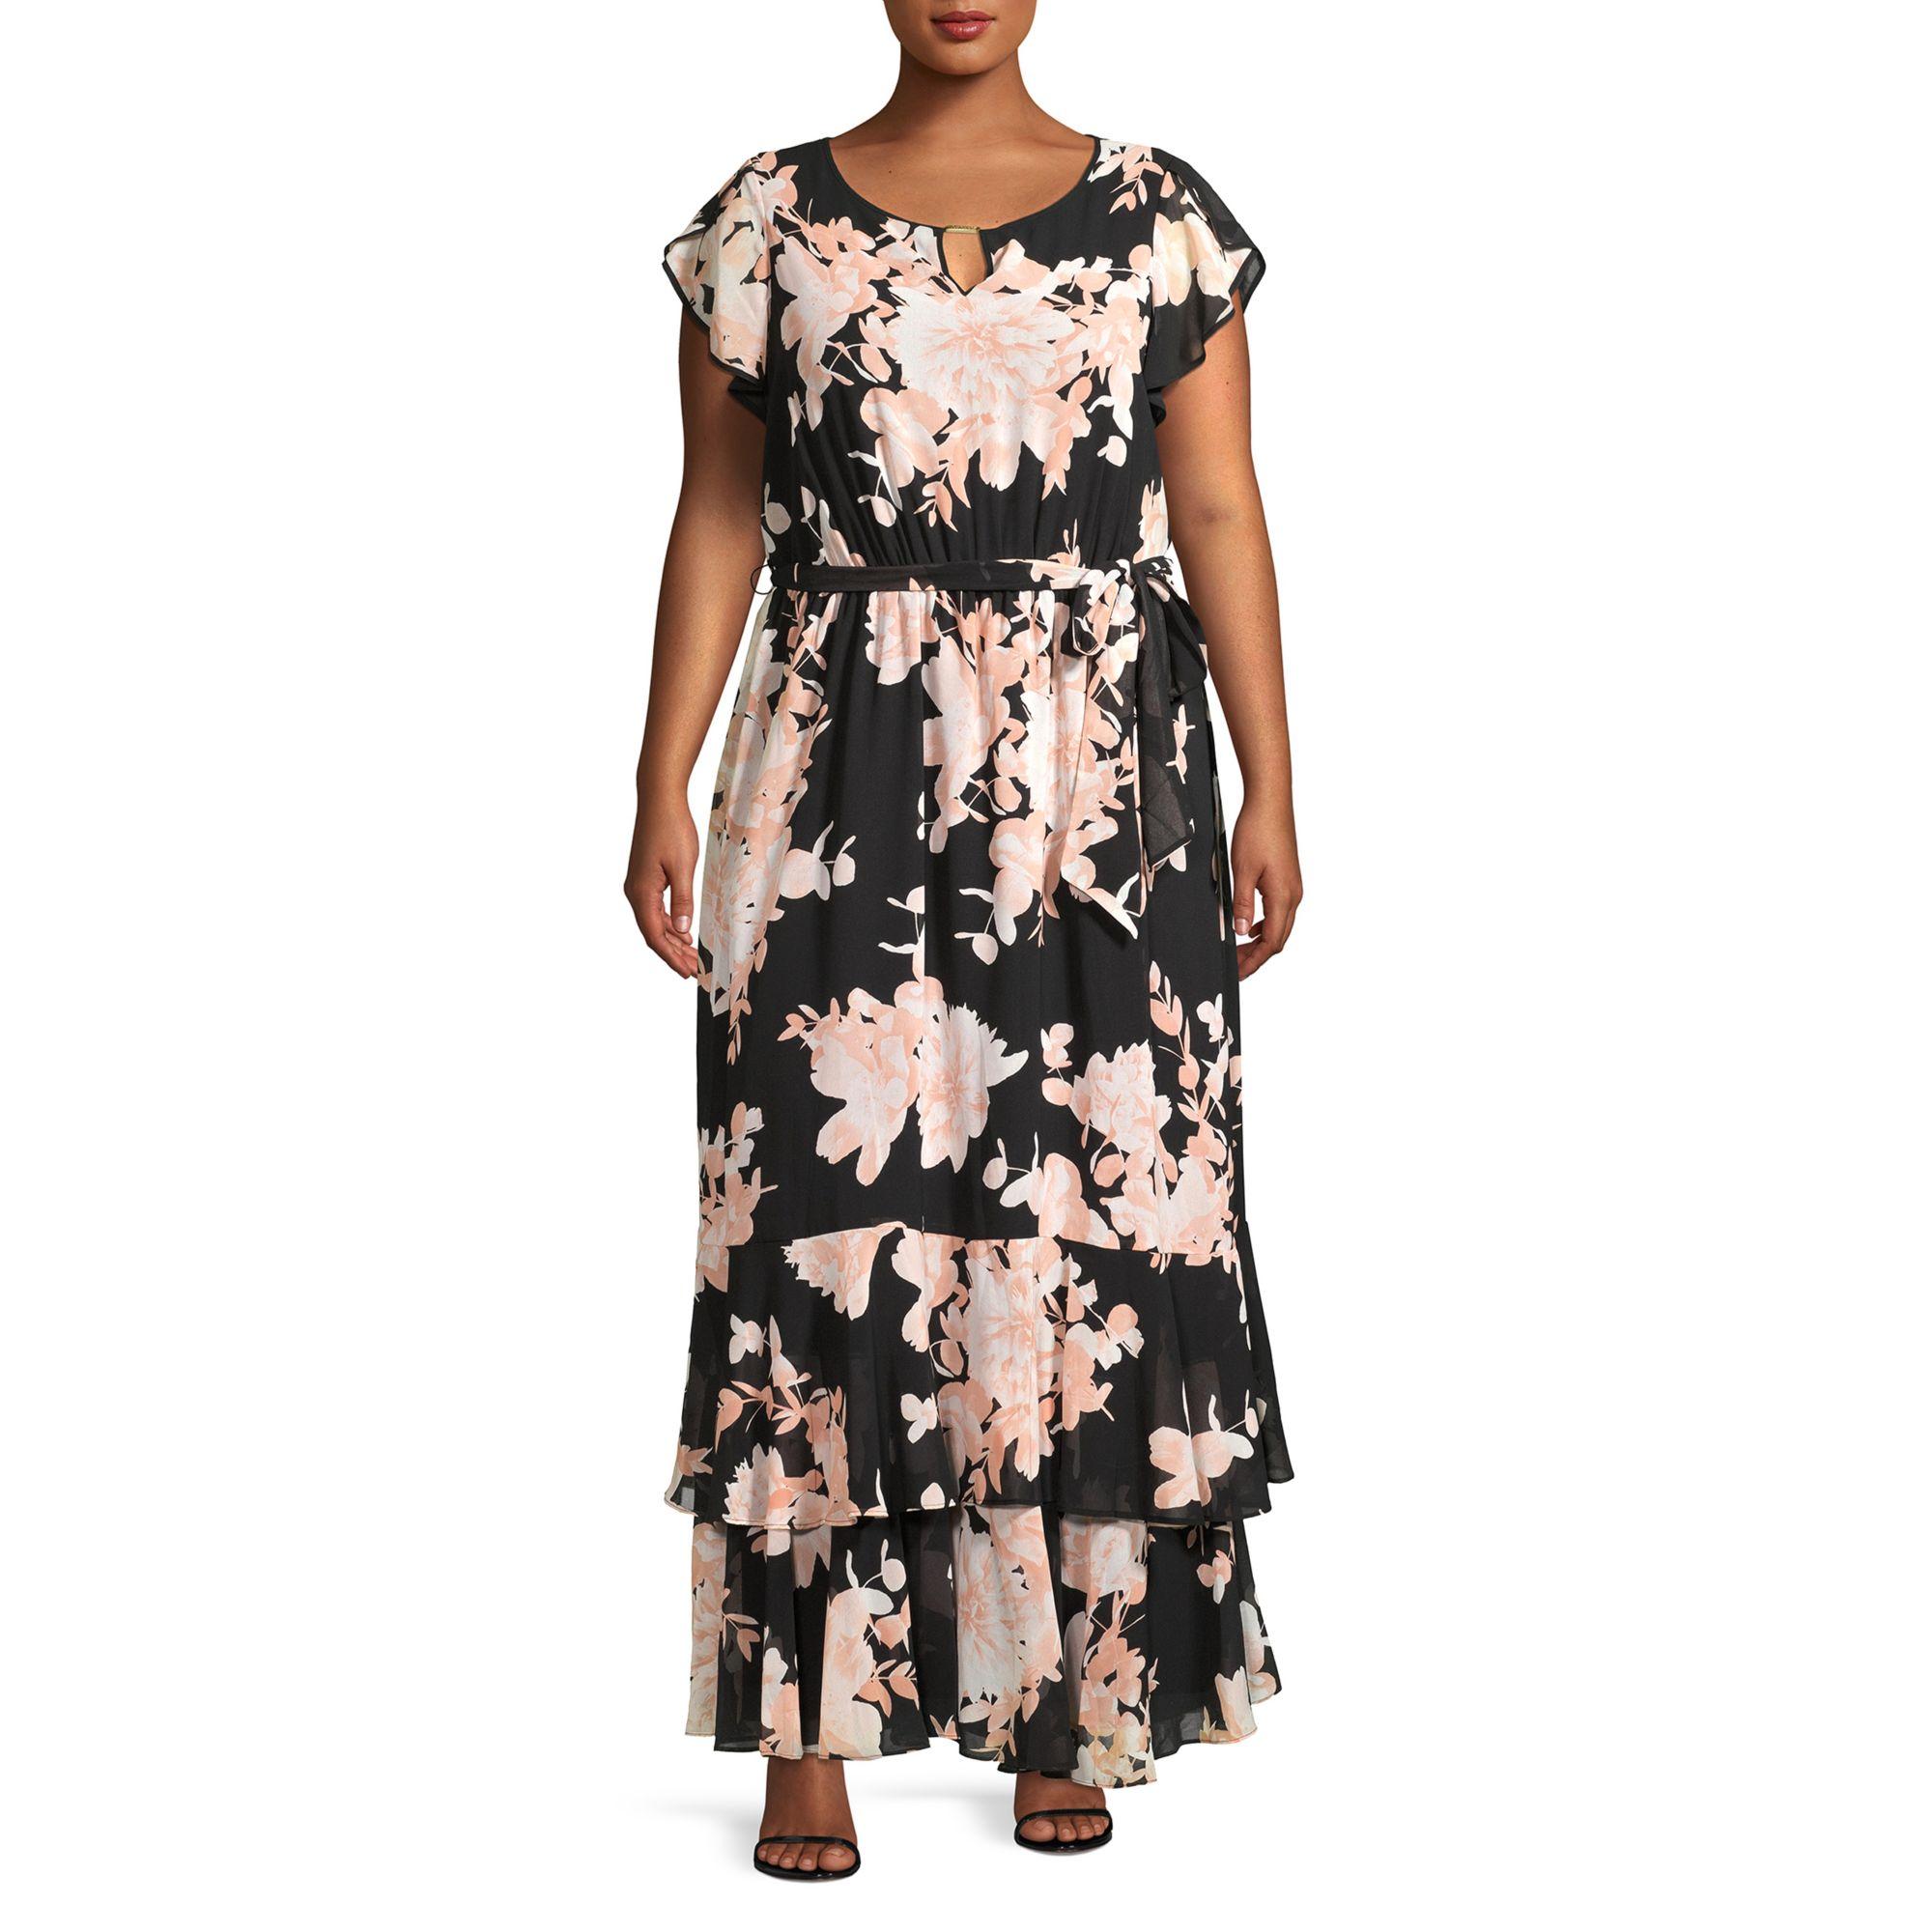 Calvin Klein Floral Chiffon Maxi Dress in Black Floral (Black) - Lyst